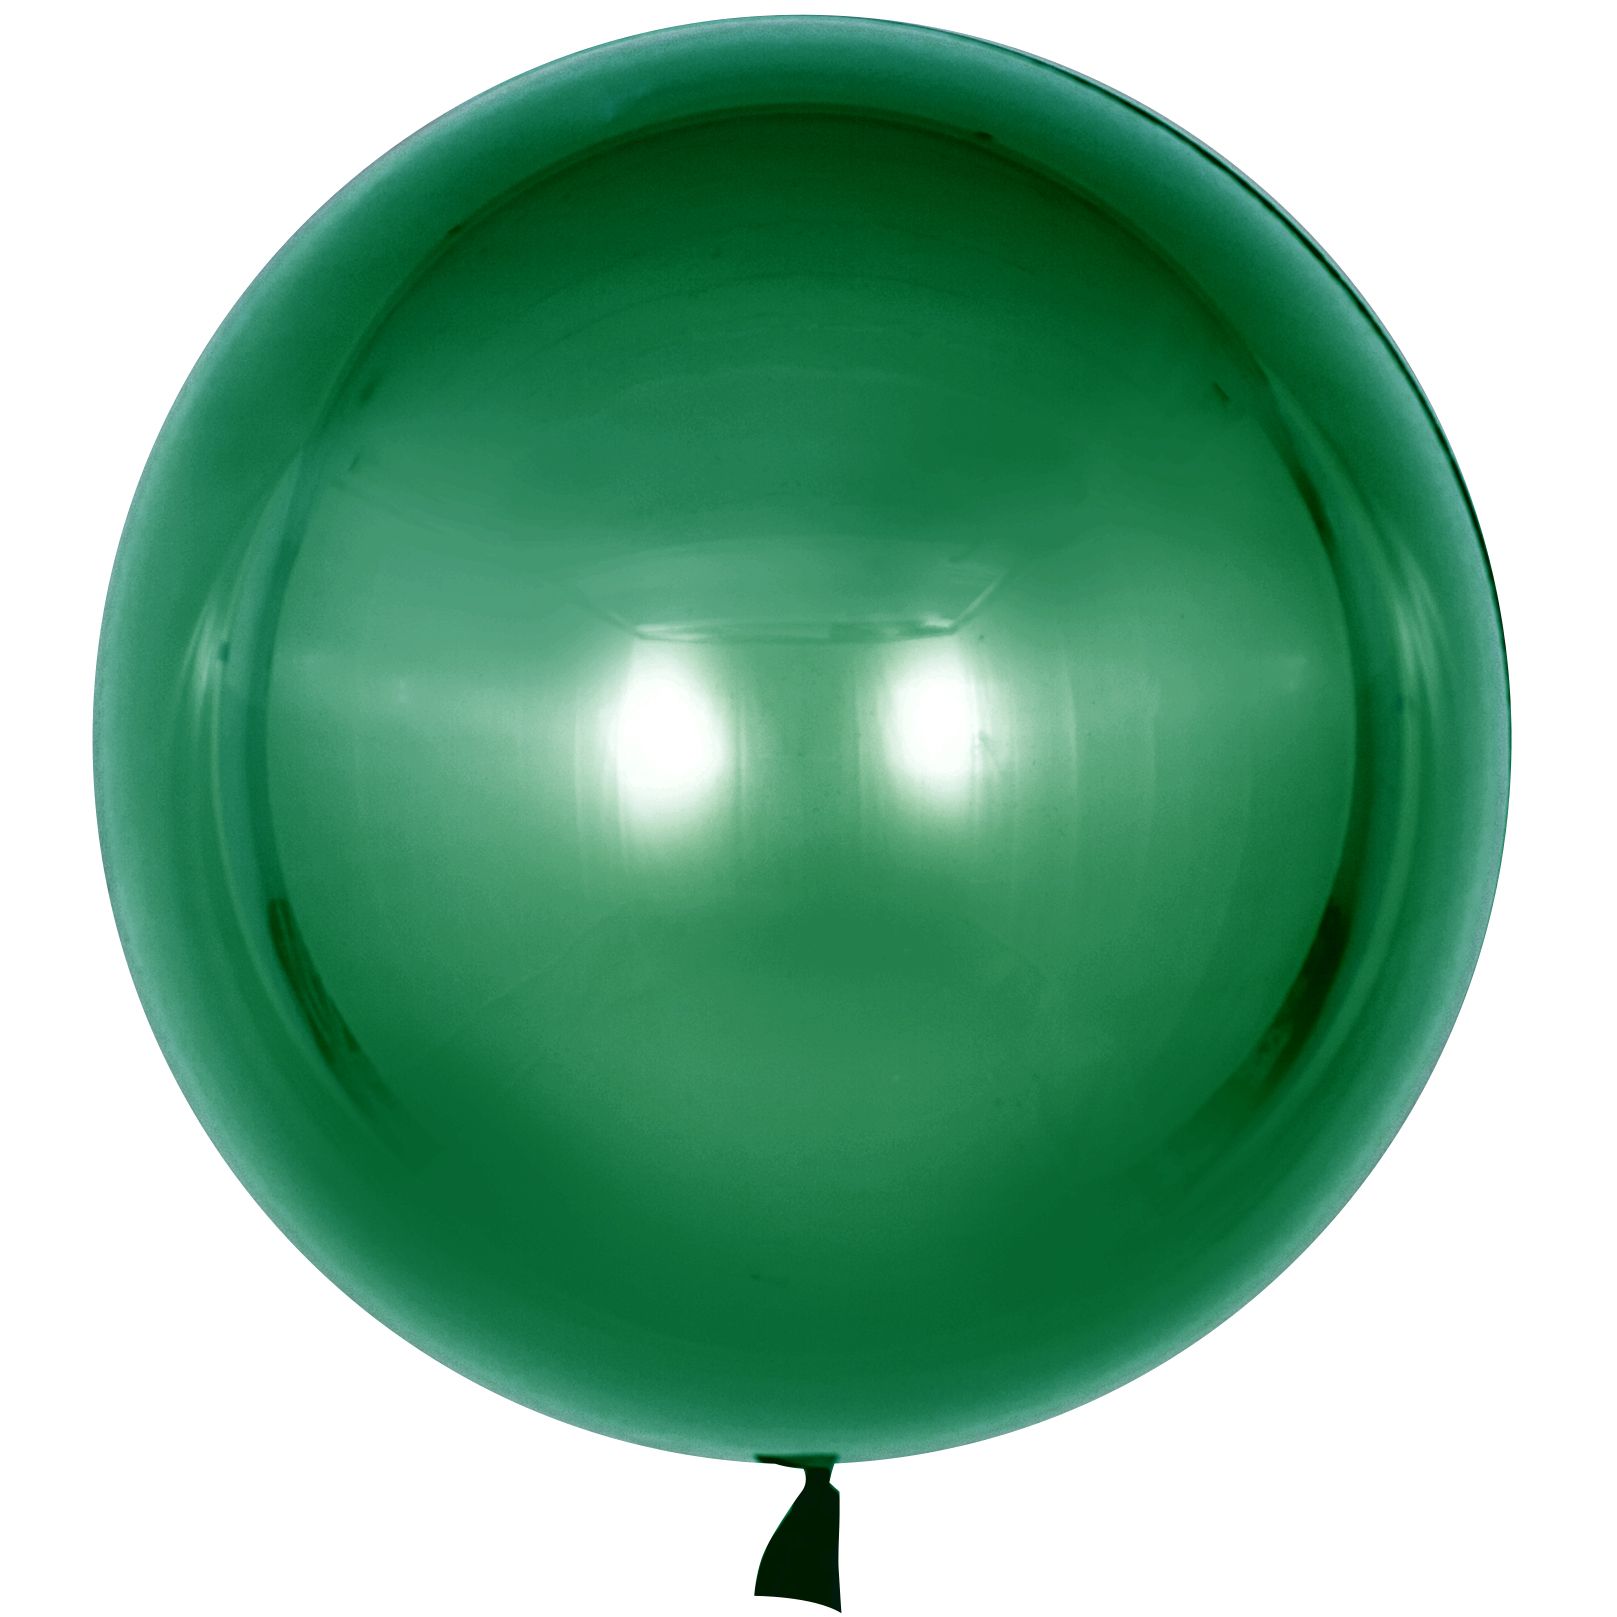 Голубому воздушному шару. Шар деко Баблс. Шар сфера Баблс зеленый. Falali сфера шар деко Баблс. Нс4-60 сфера надувная.